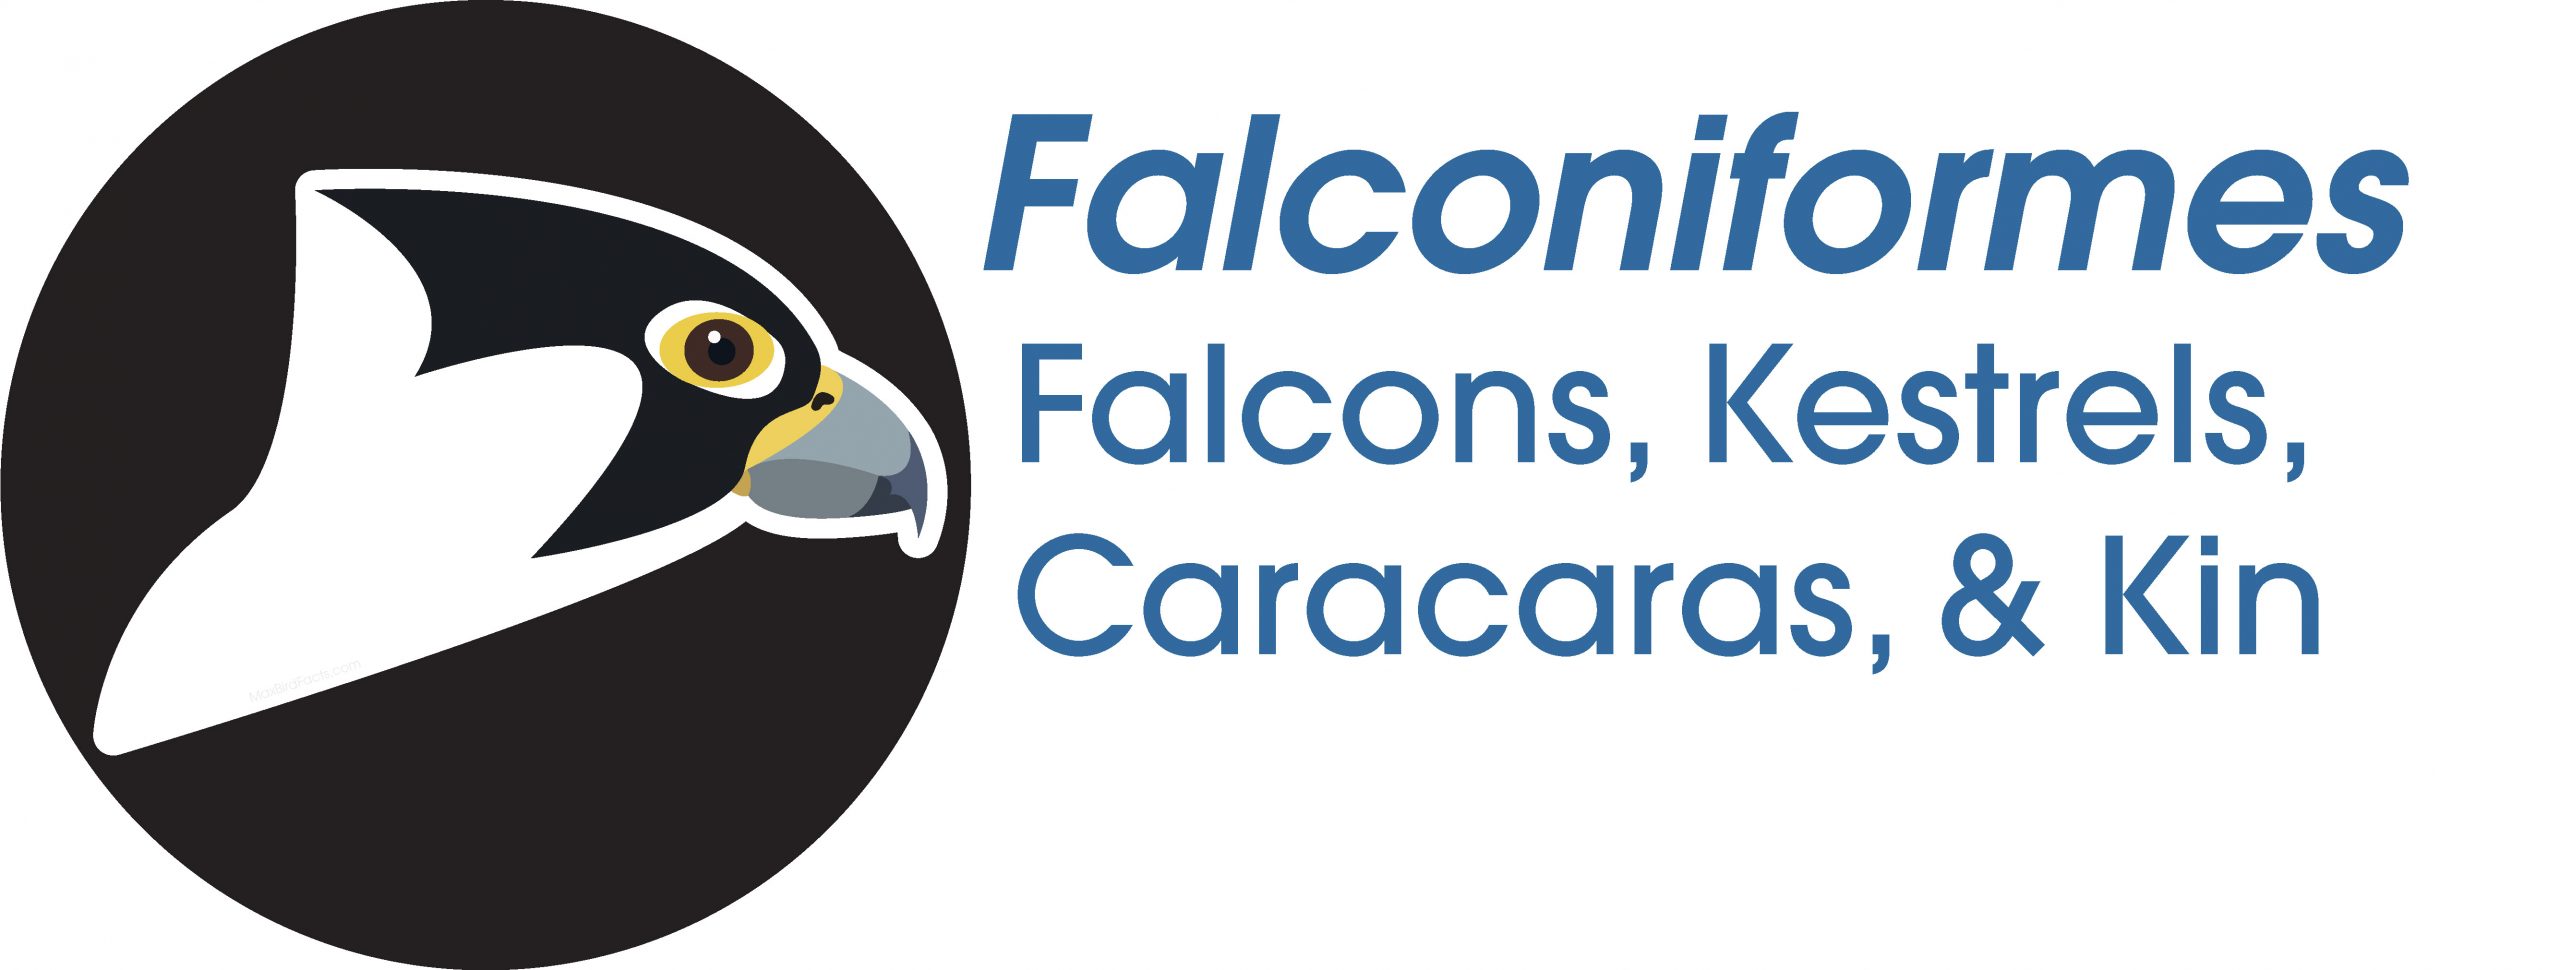 Falconiformes
Falcons, Kestrels, Caracaras, and Kin
Peregrine Falcon